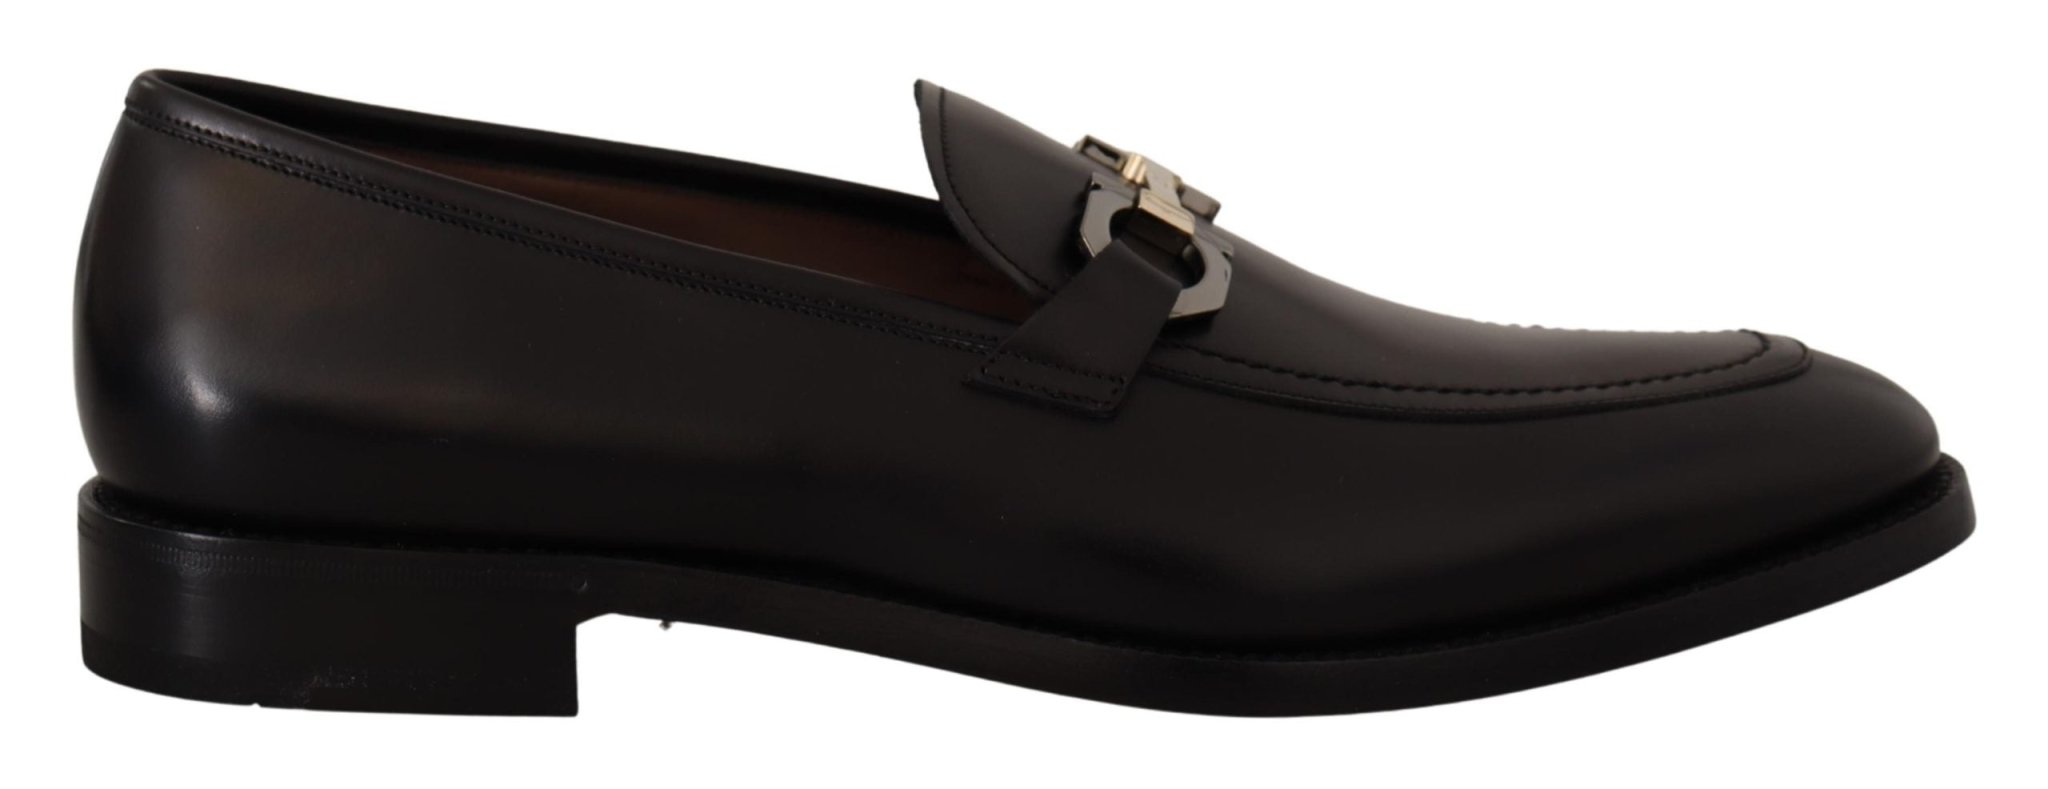 Salvatore Ferragamo Black Calf Leather Moccasin Formal Shoes - Fizigo